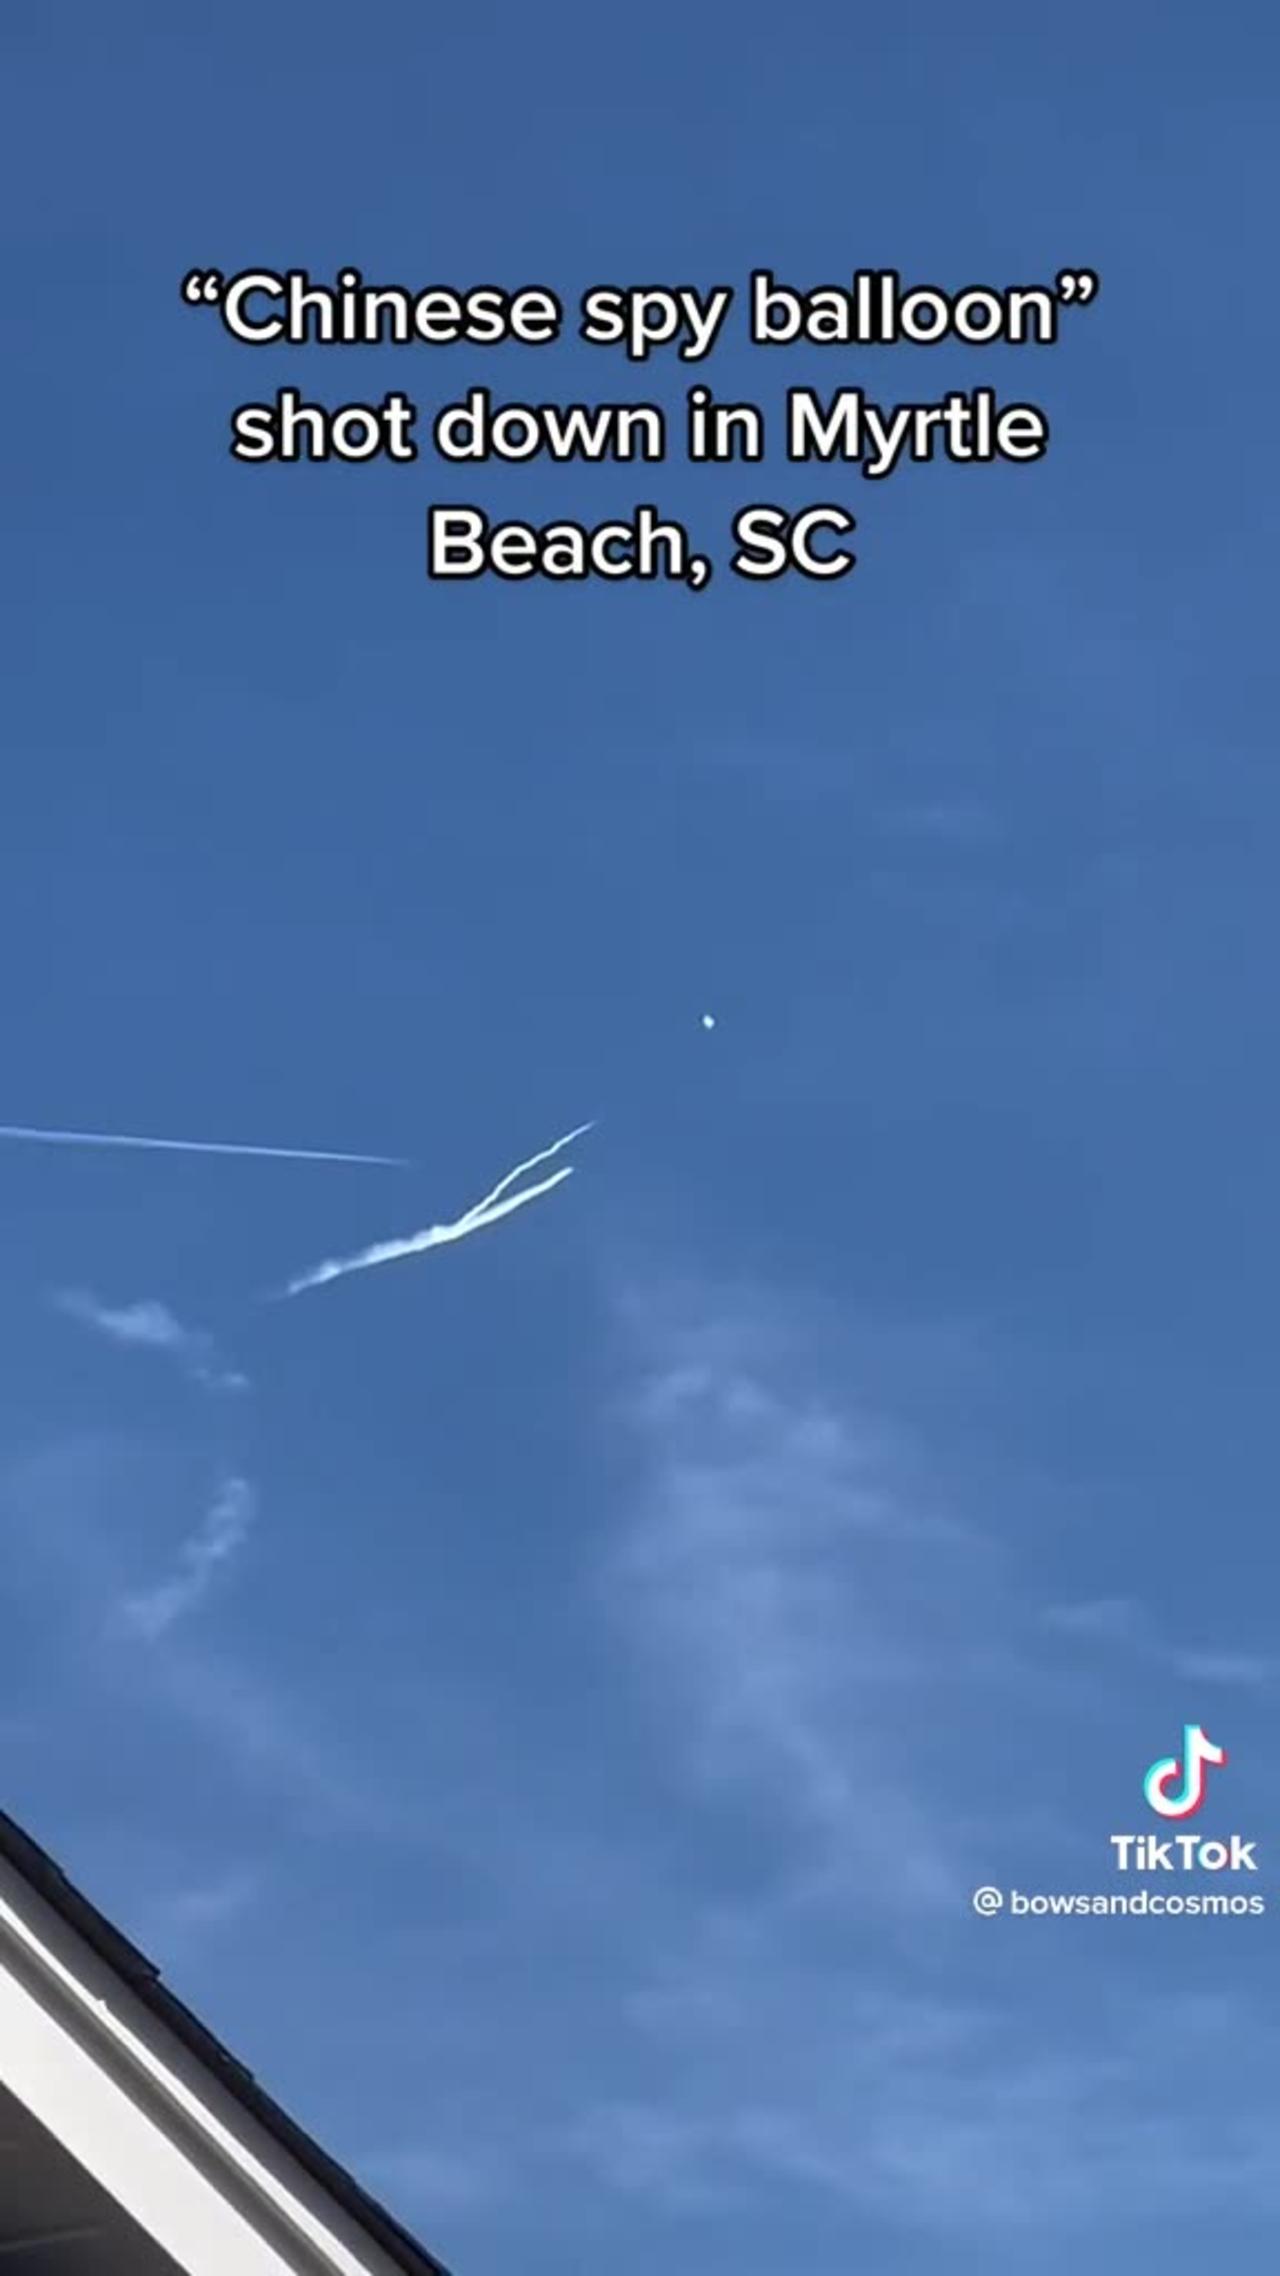 South Carolina balloon shot down.